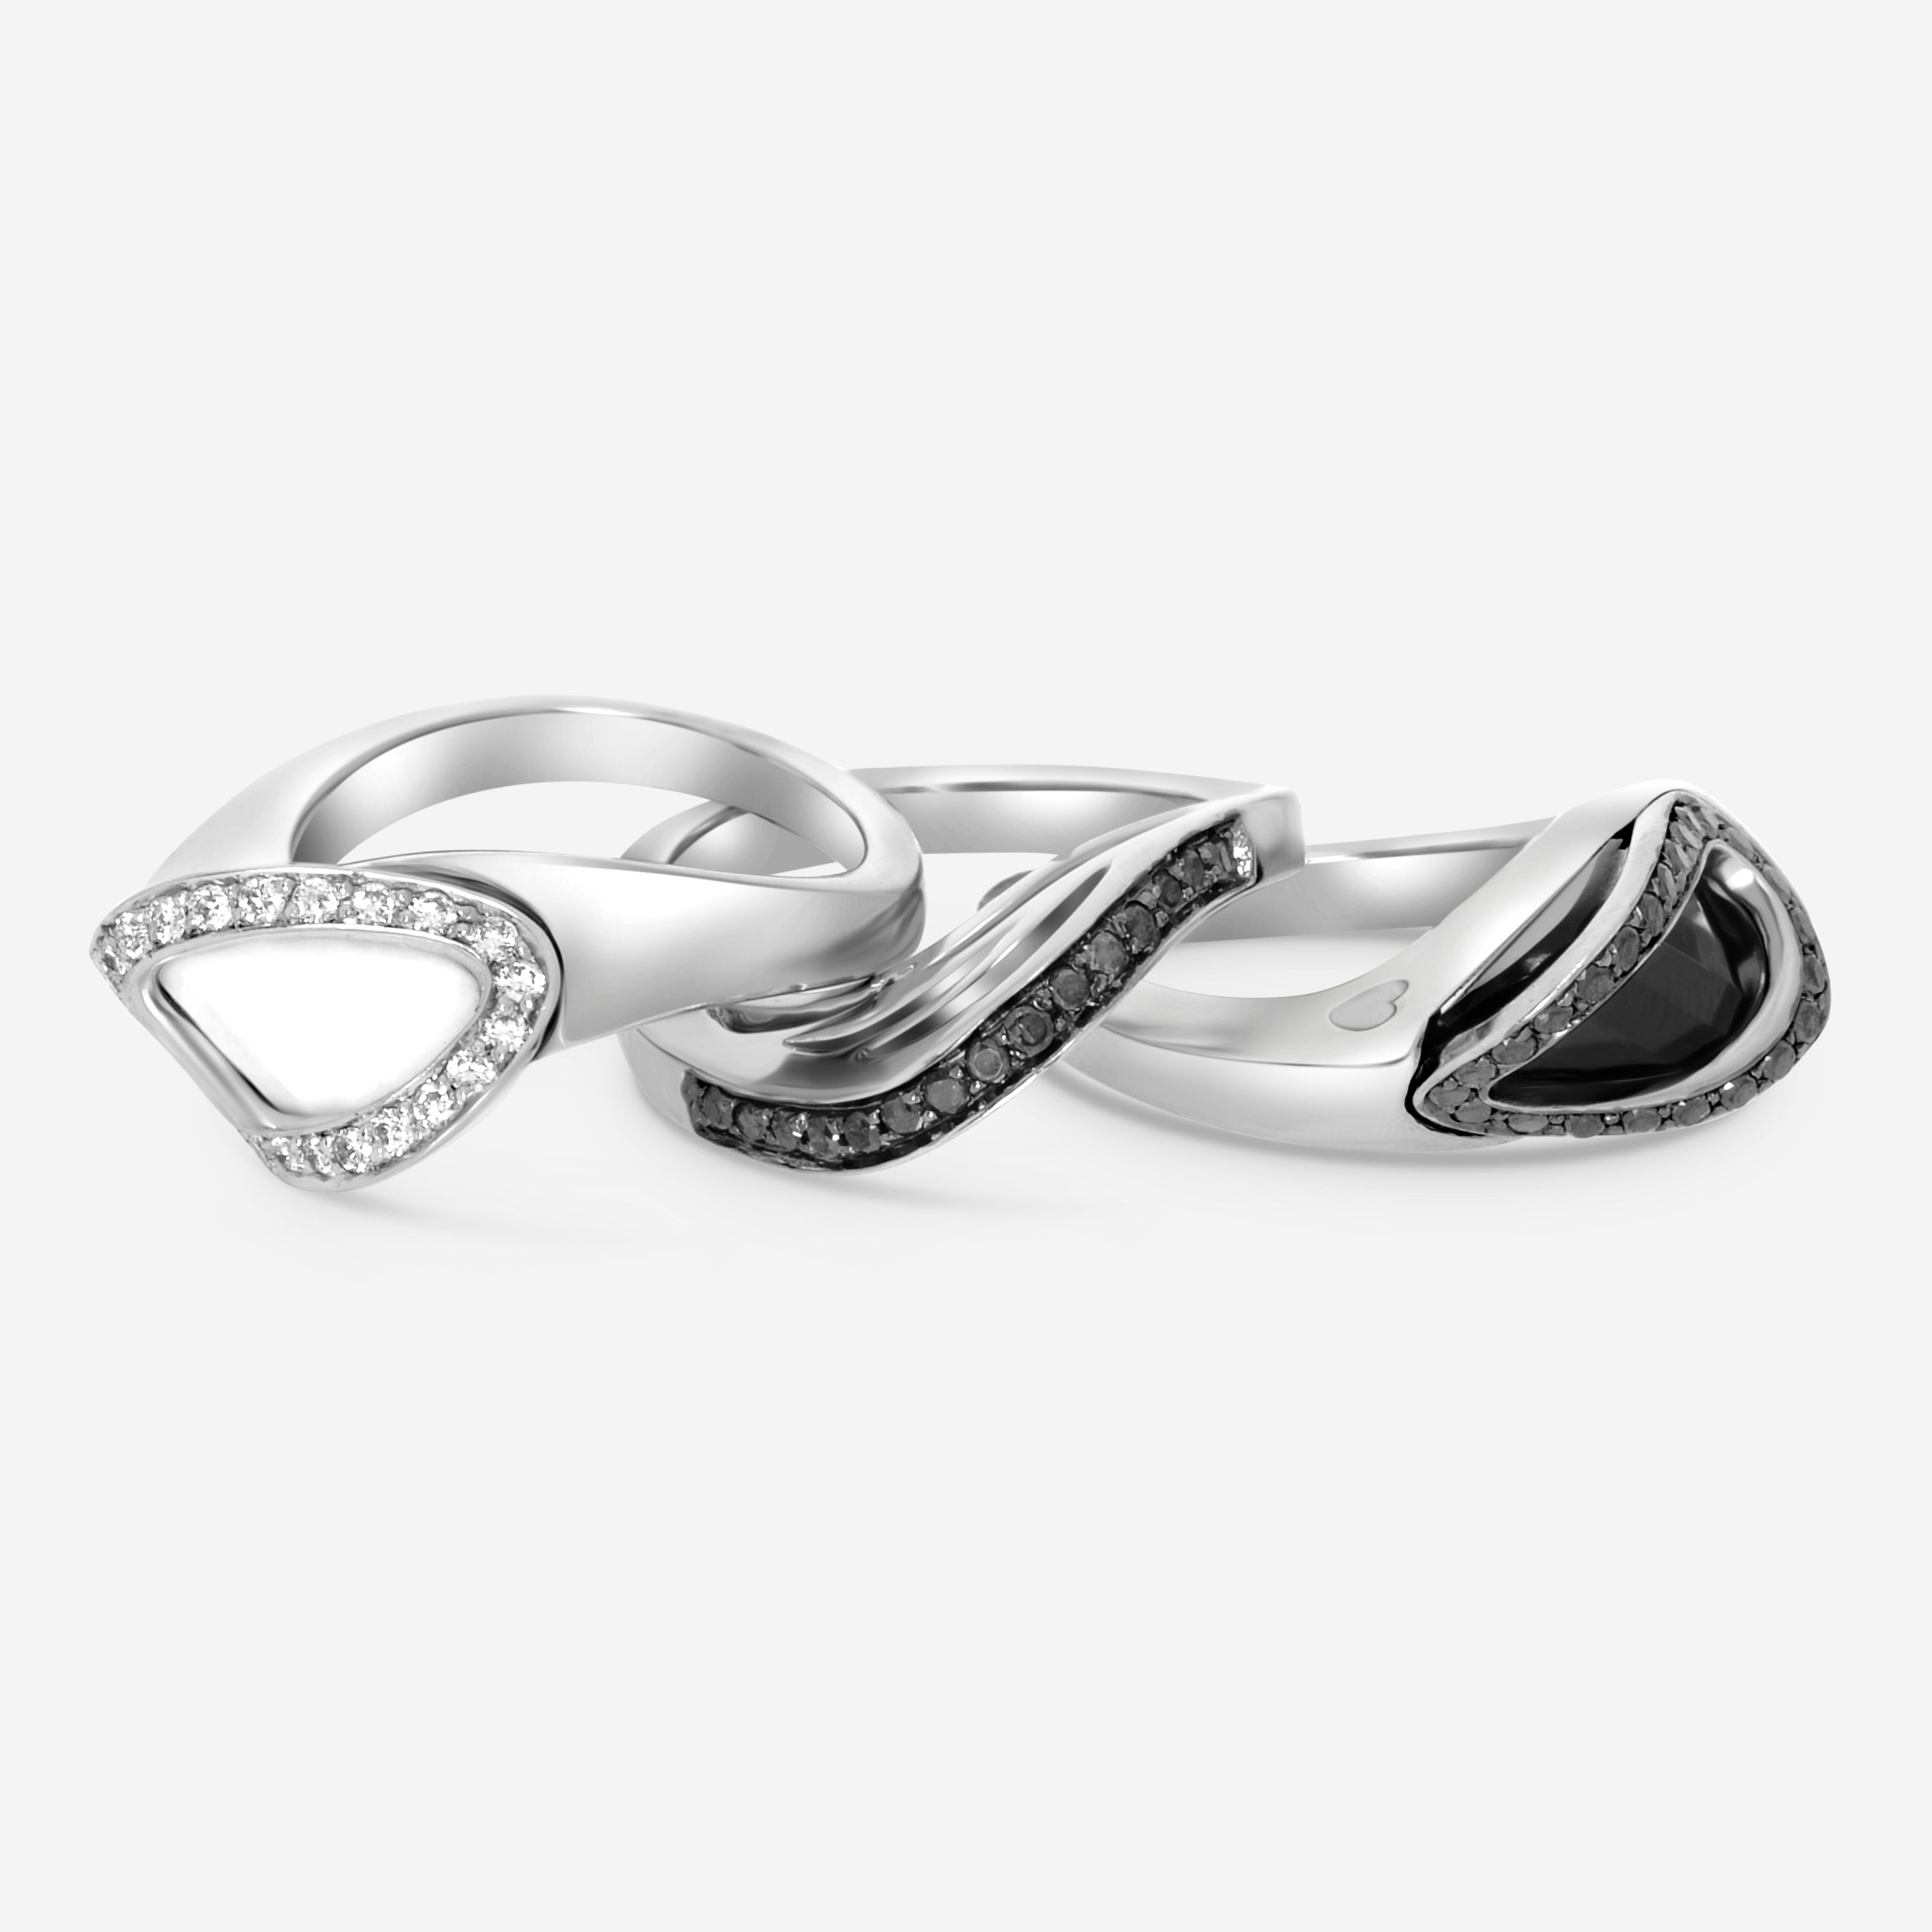 SuperOro 18K White Gold, Diamond and Black Diamond Stackable Ring 62710 - THE SOLIST